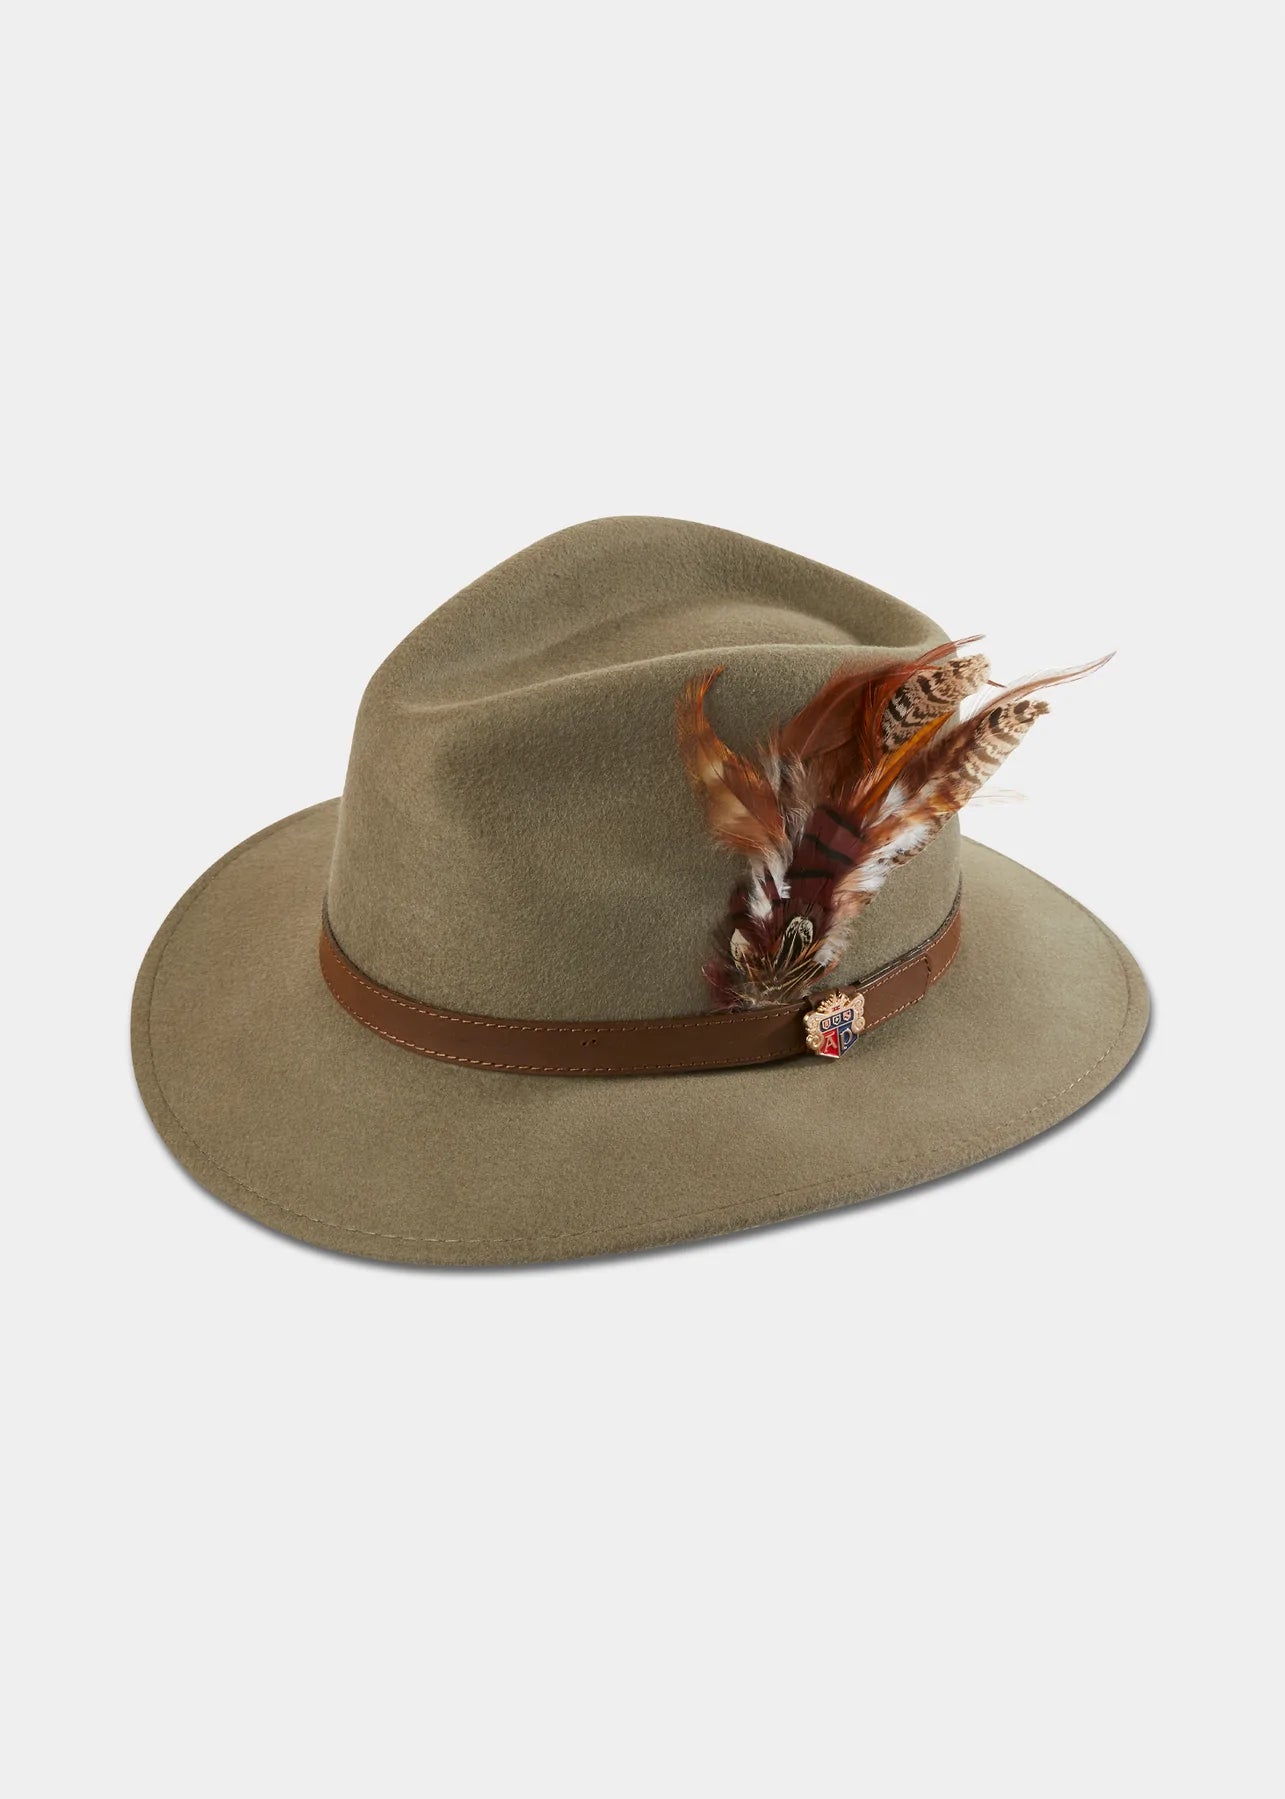 Ladies Richmond Felt Hat with Feather